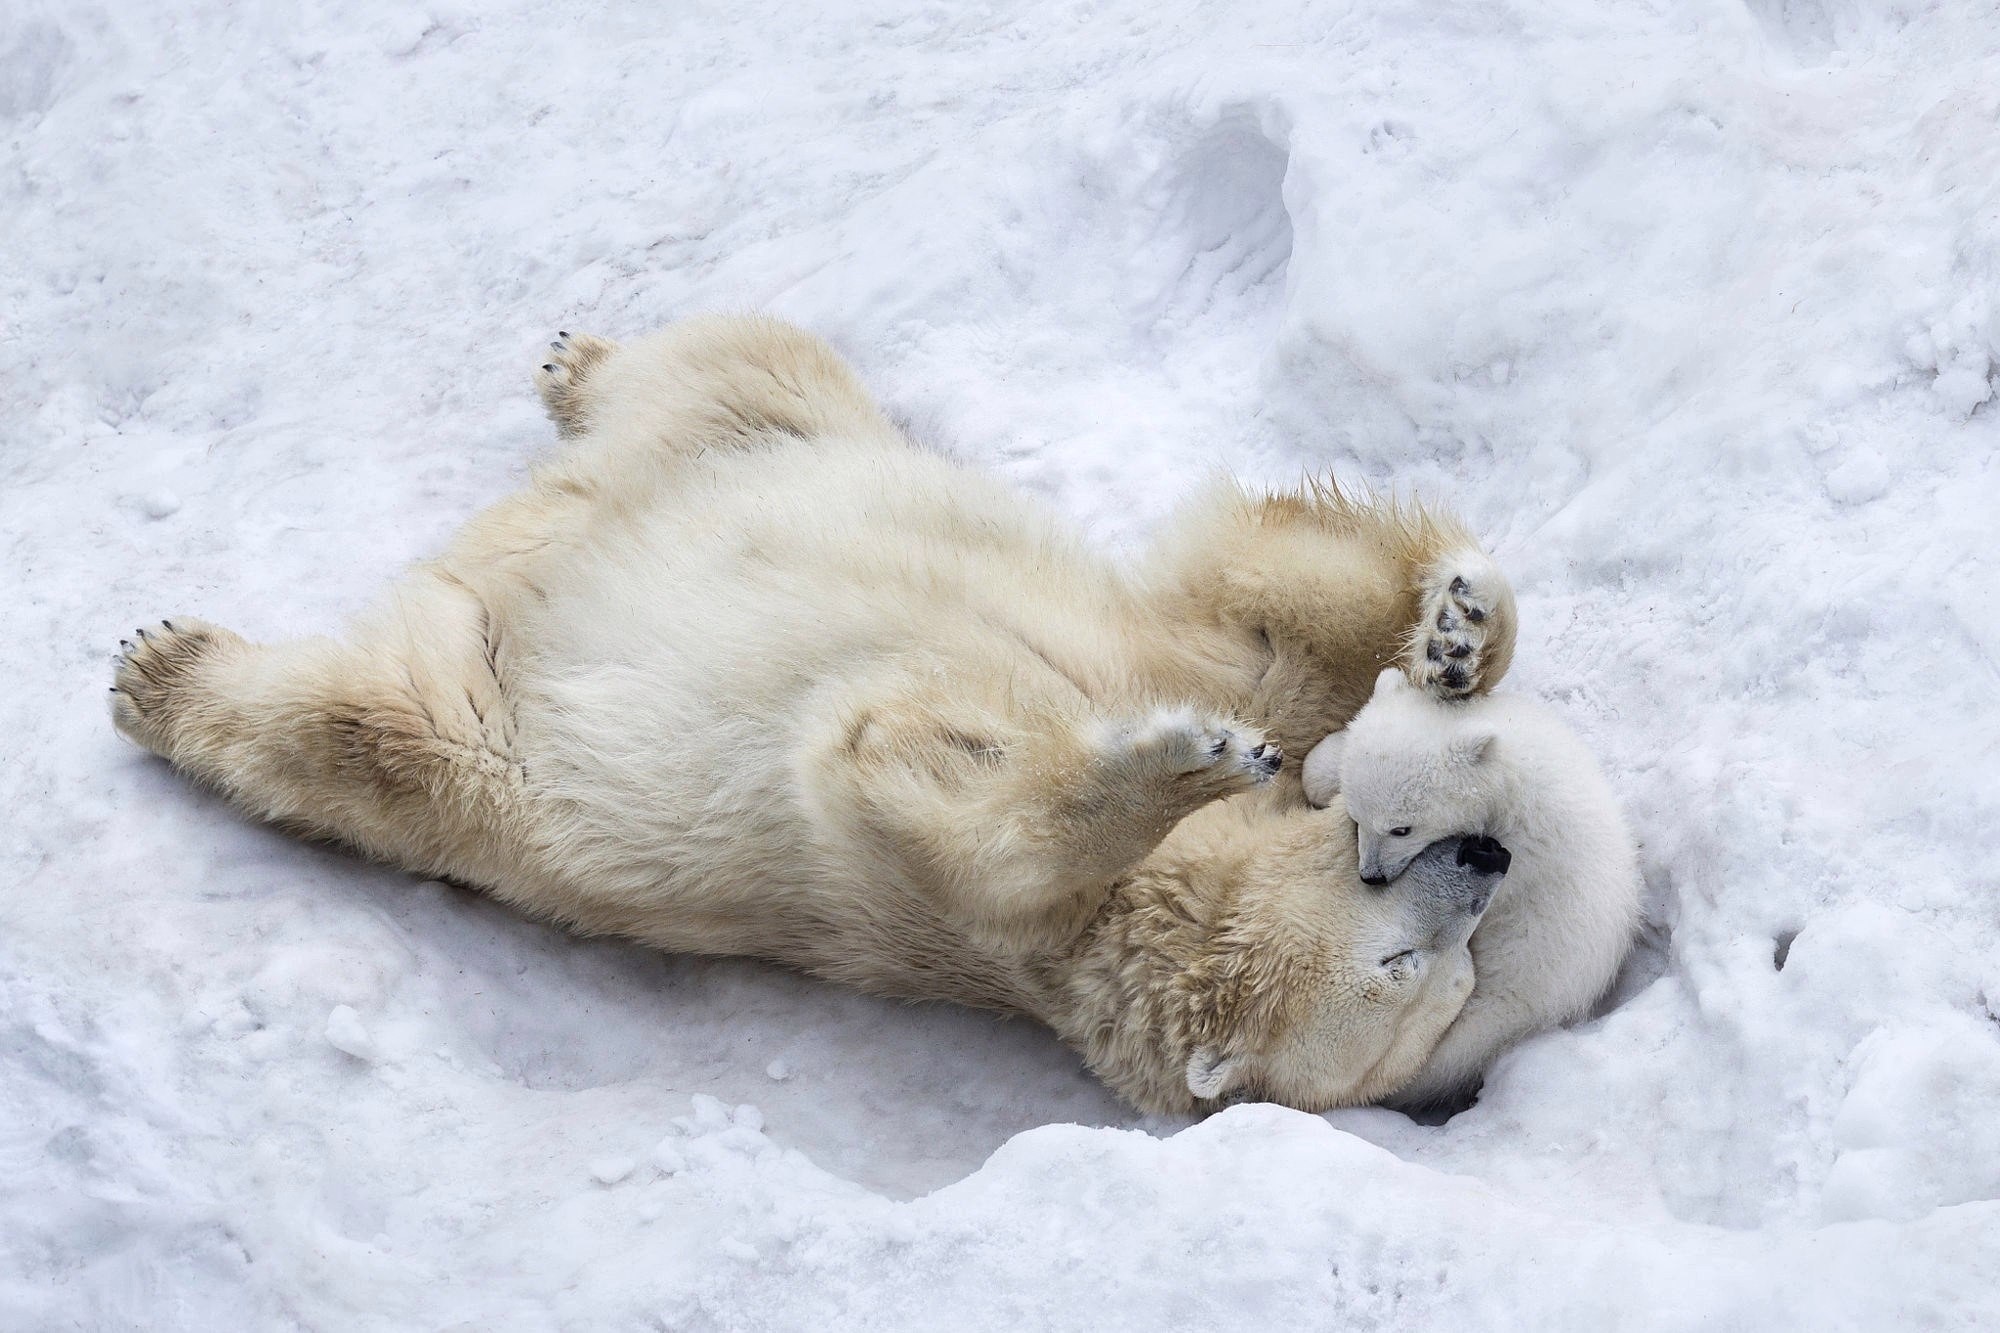 General 2000x1333 nature animals winter polar bears wildlife baby animals snow playing white lying on back